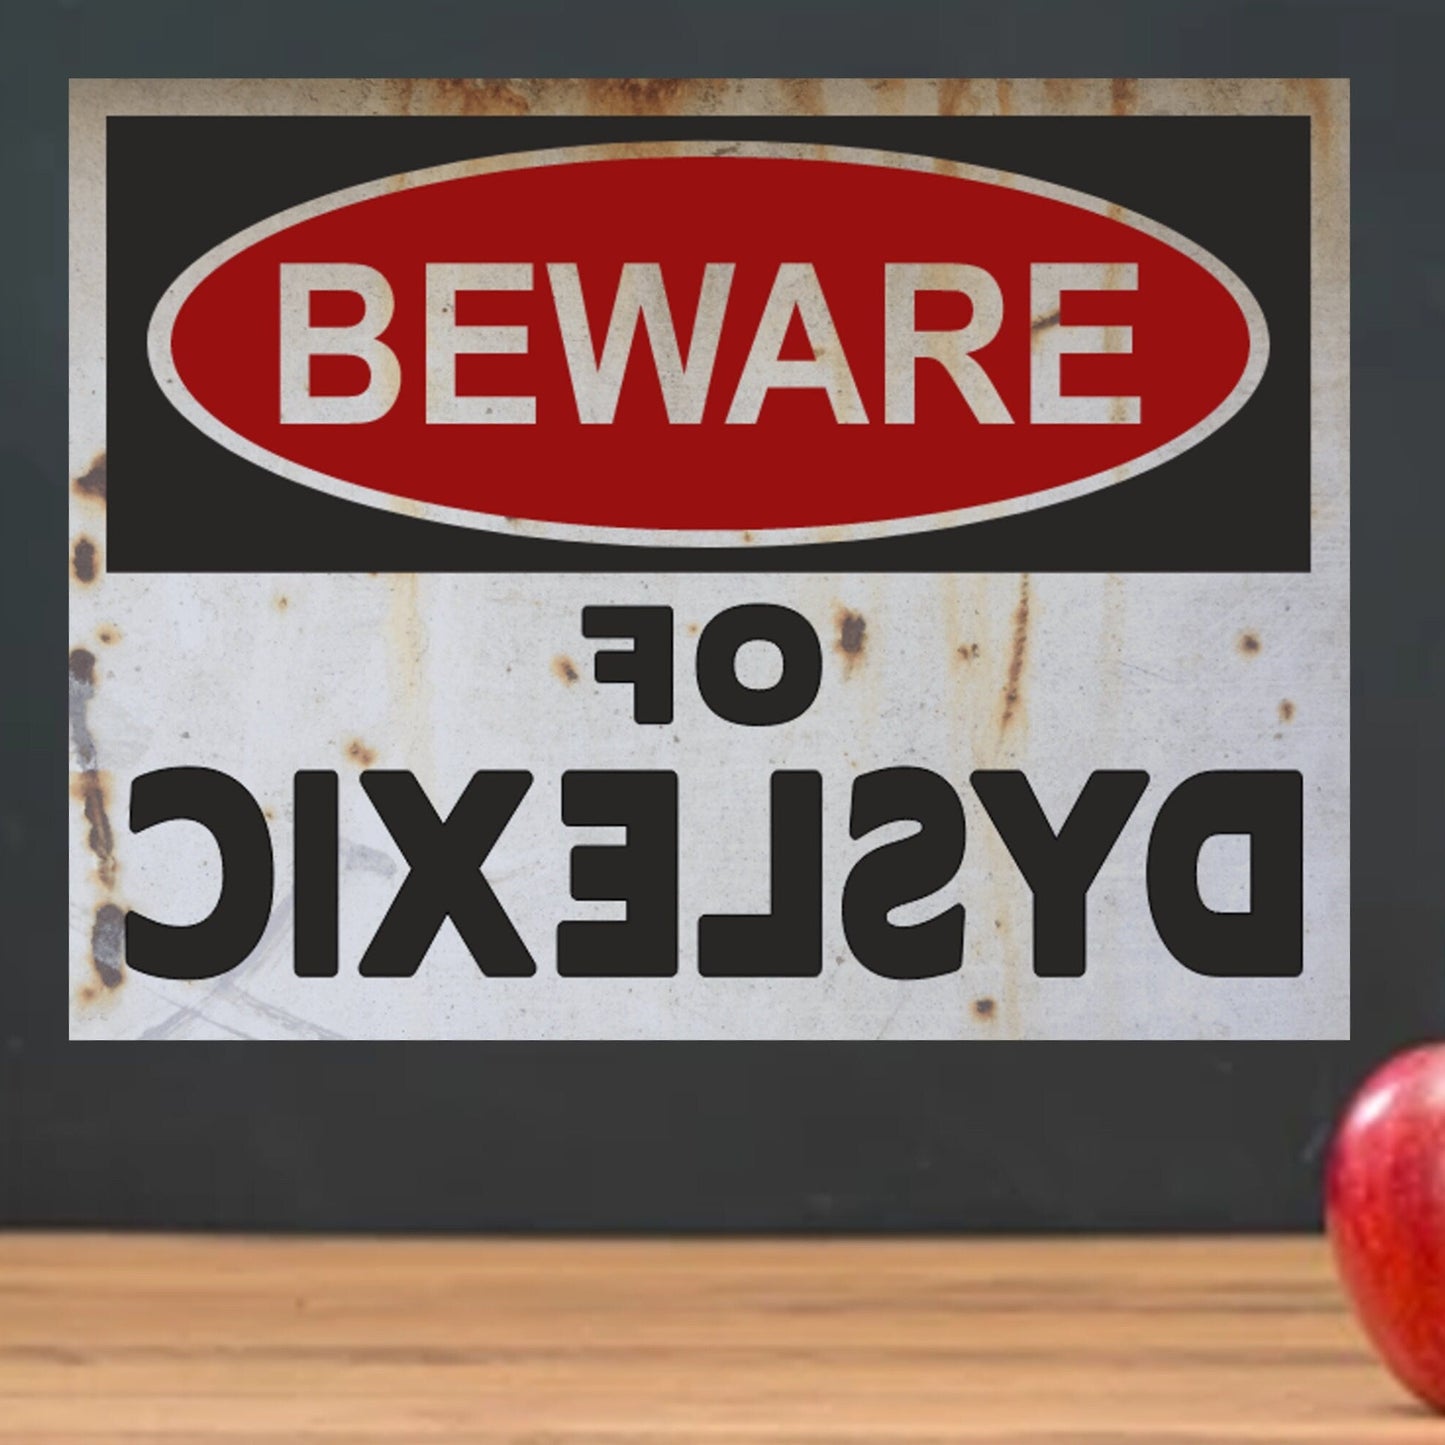 beware of dyslexic warning sign